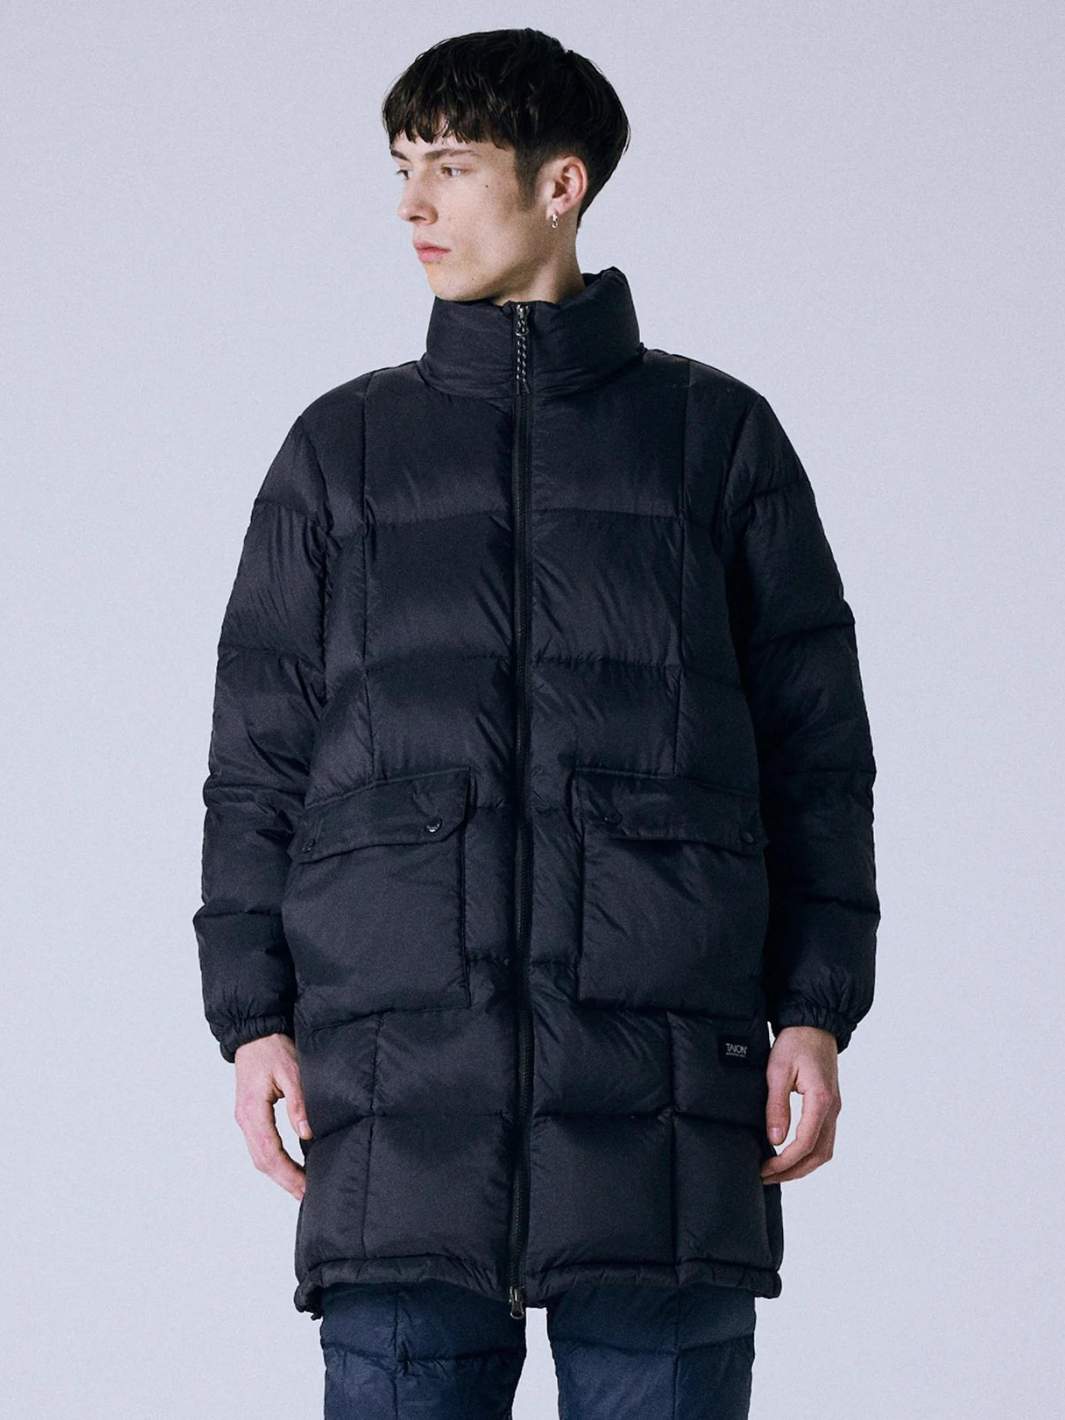 Taion Outerwear Kåpe | Mountain Packable Coat